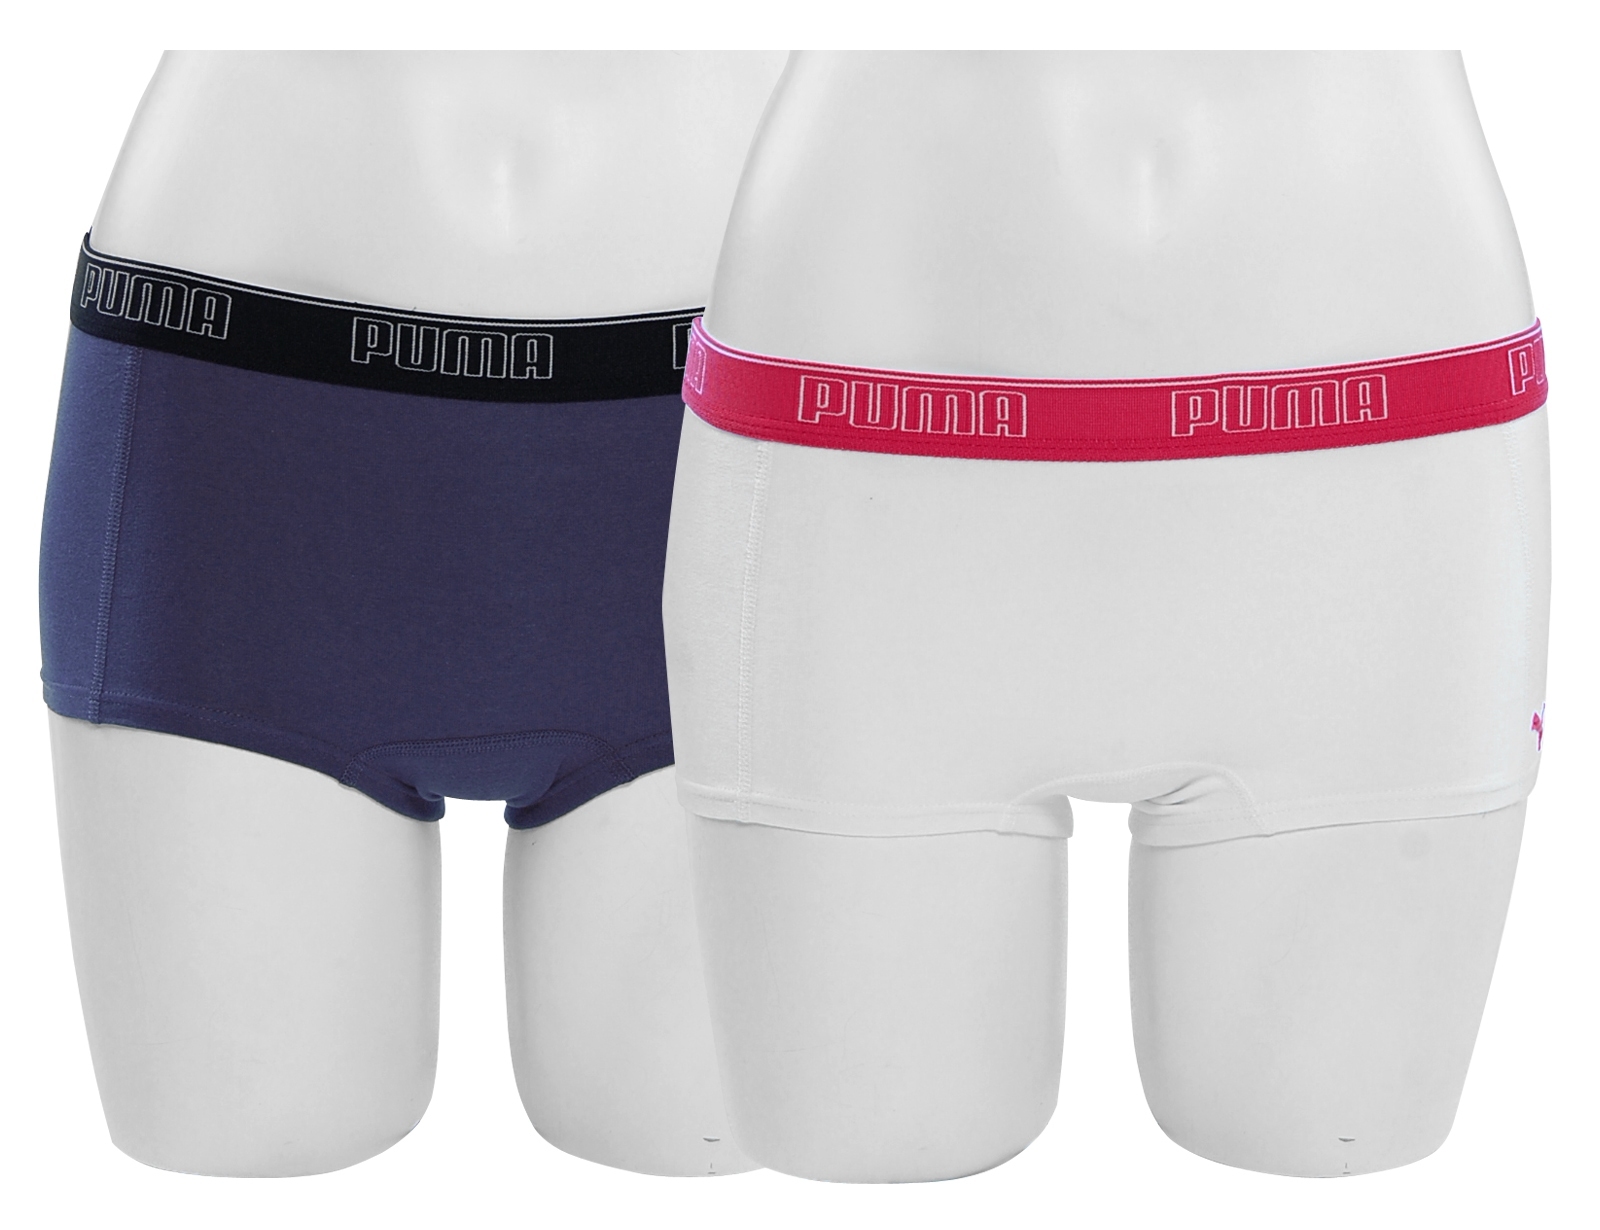 Avantisport - Puma - Women's Mini Short 2-Pack - White/pink And Purple/black